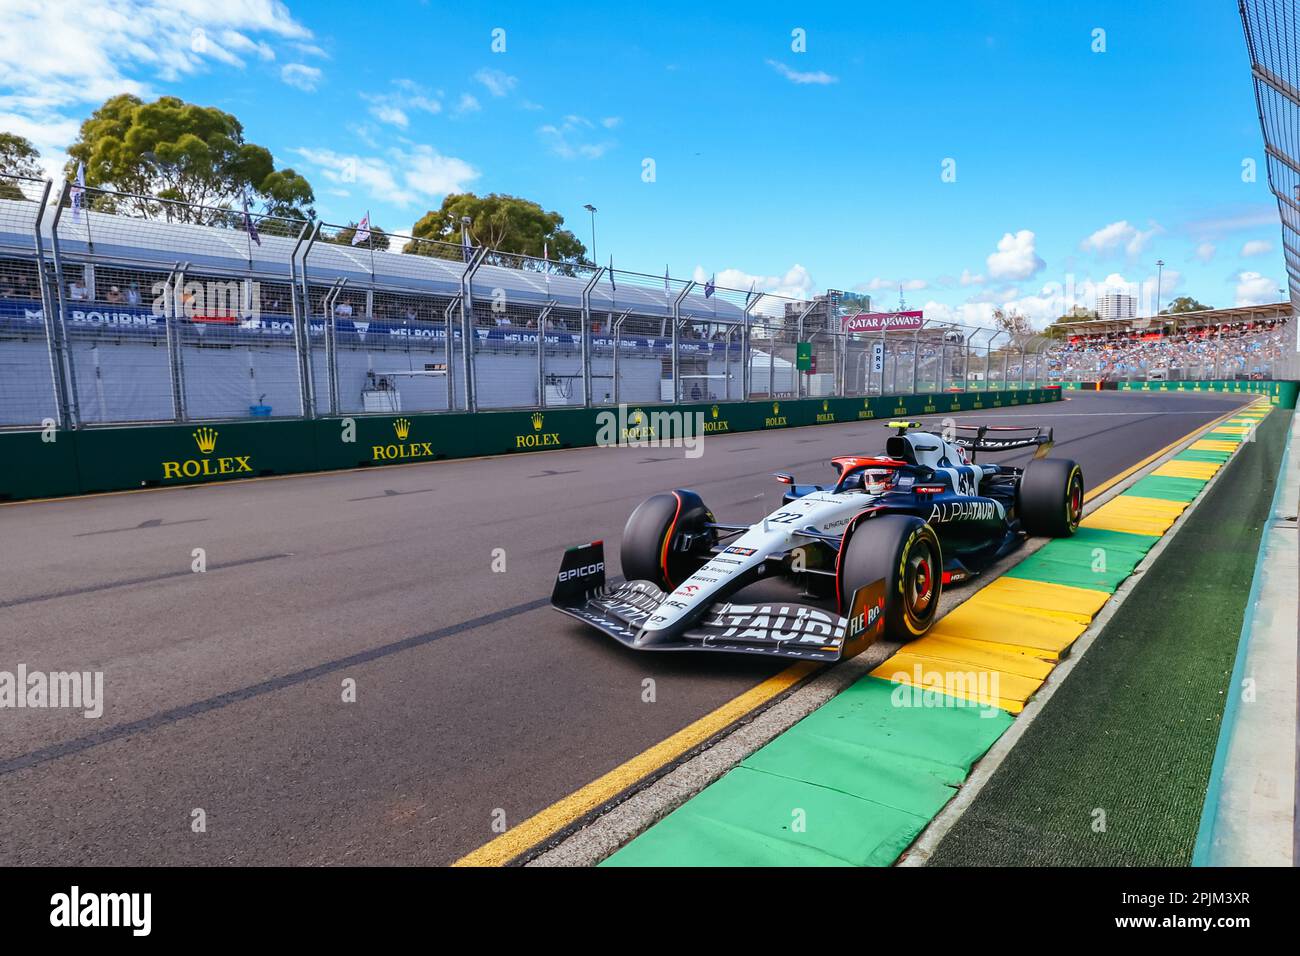 MELBOURNE, AUSTRALIA - MARCH 31: Yuki Tsunoda of Japan drives the Scuderia AlphaTauri AT04 during practice at the 2023 Australian Formula 1 Grand Prix Stock Photo